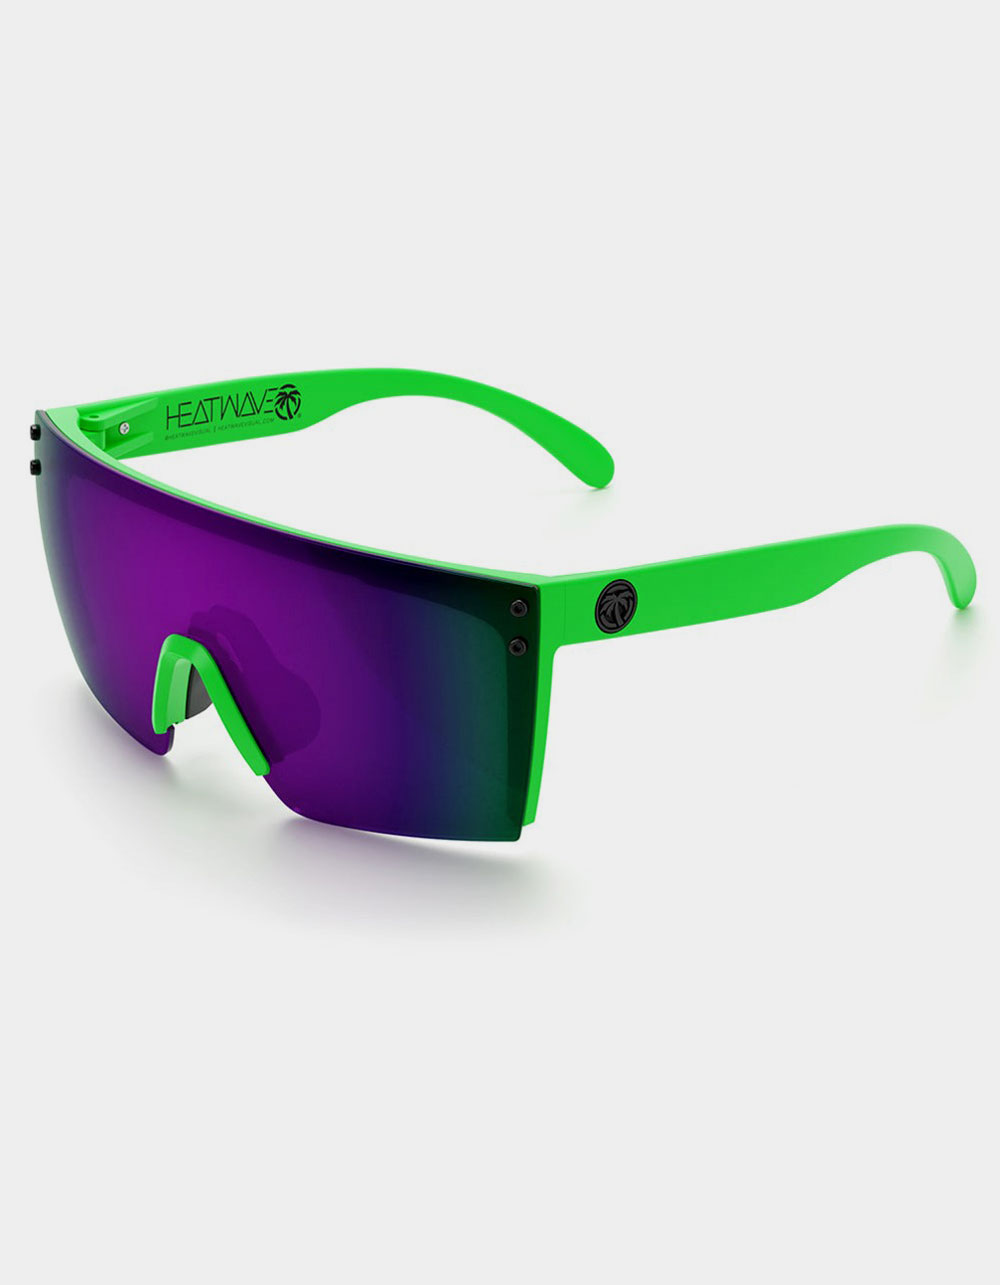 Heat Wave Visual Lazer Face Sunglasses in Green Frame Aerosol Green w/ Moto Green Frame/Polarized Ultra-Violet Lens, Customs